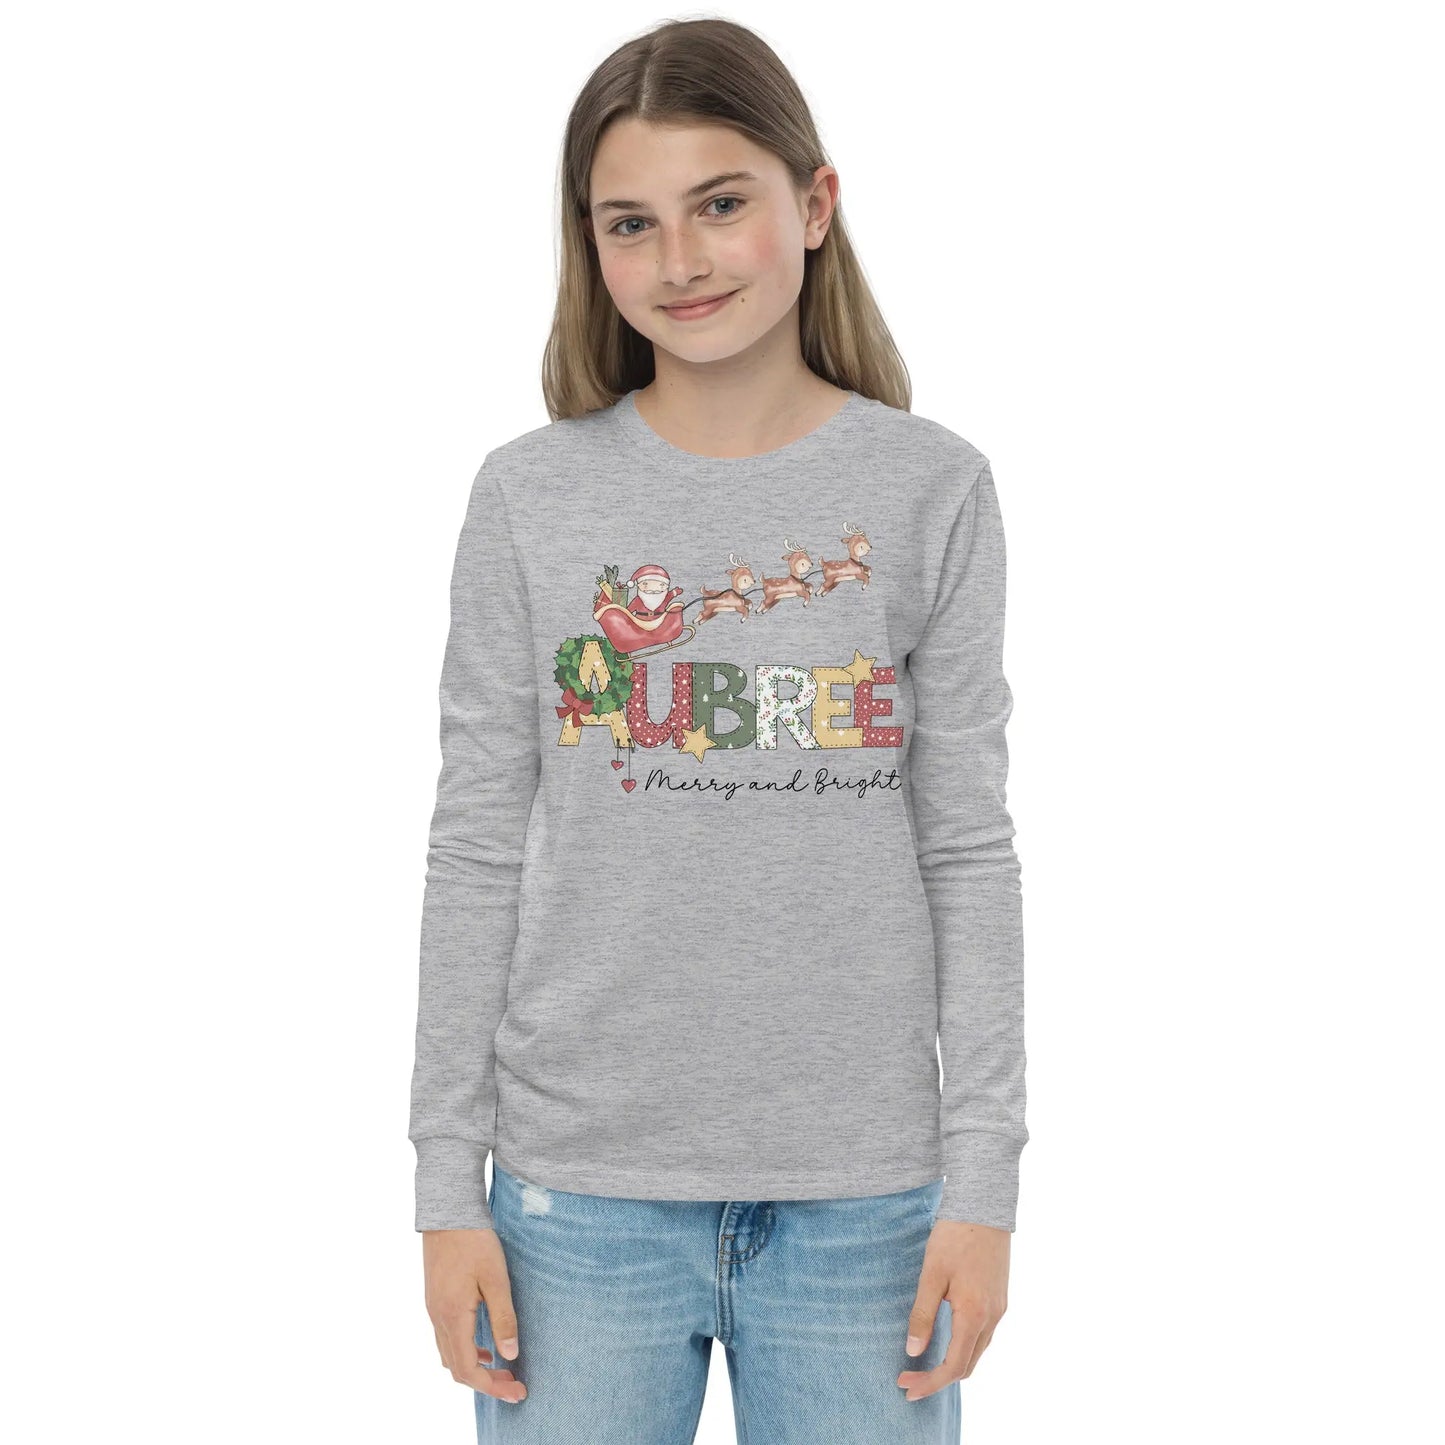 Personalized Youth Long Sleeve Christmas T-Shirt Amazing Faith Designs